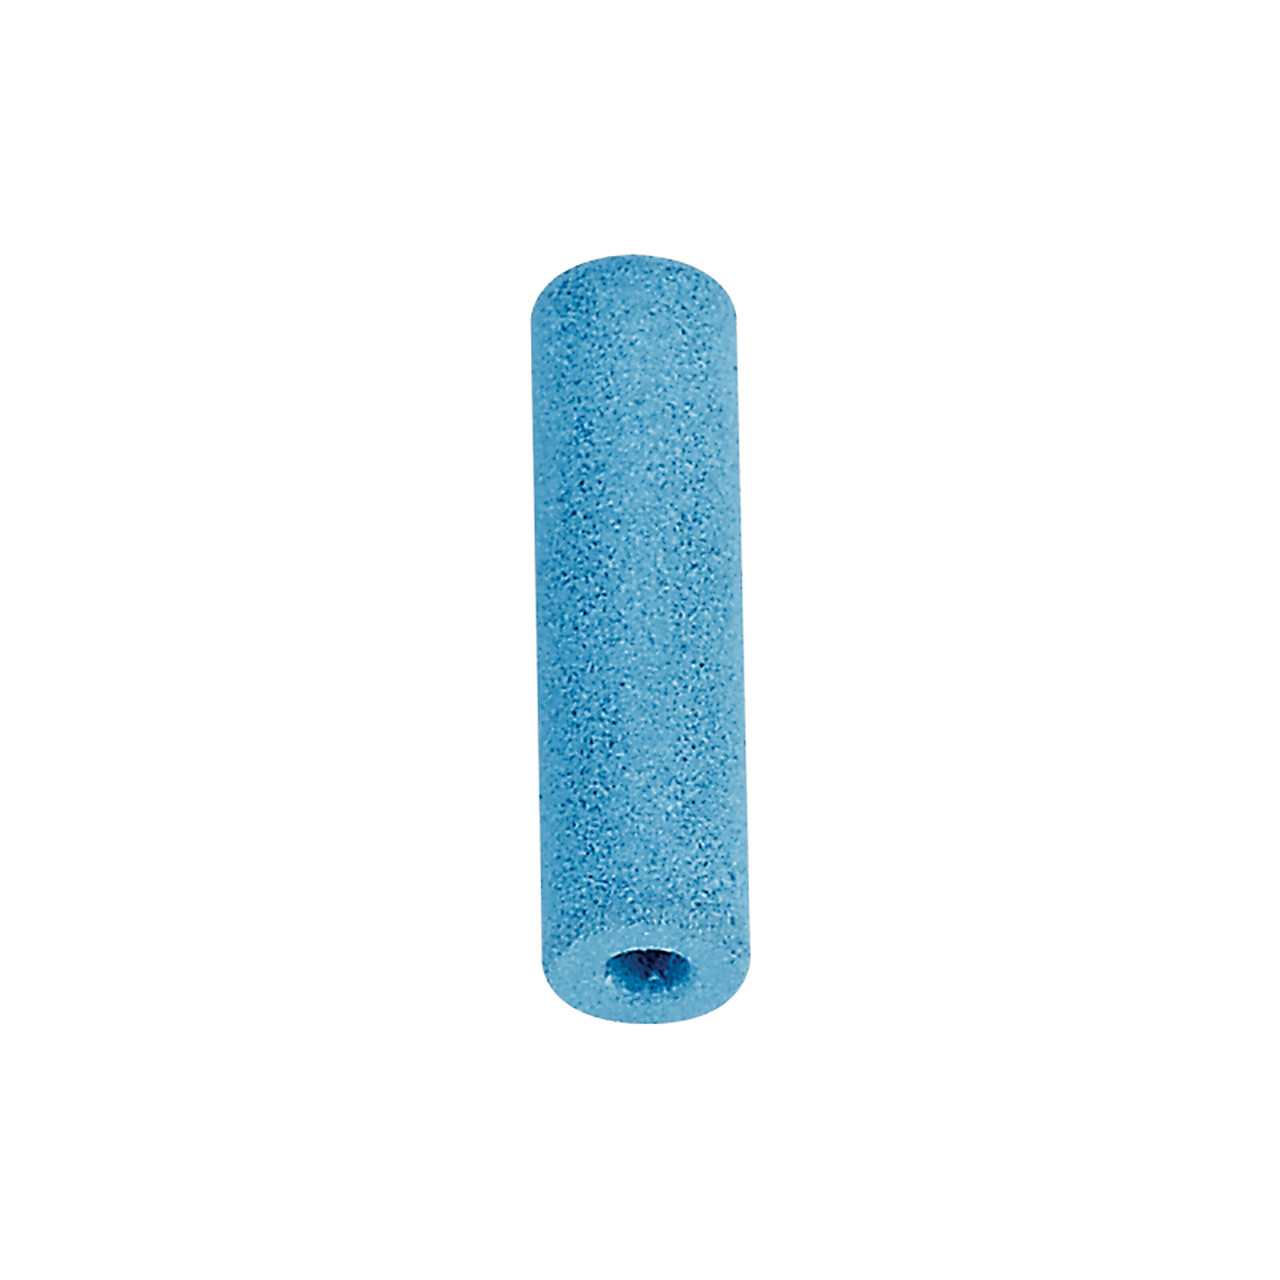 Edenta Titanium Polishers, Blue - Cylinder (Pkg. of 10)